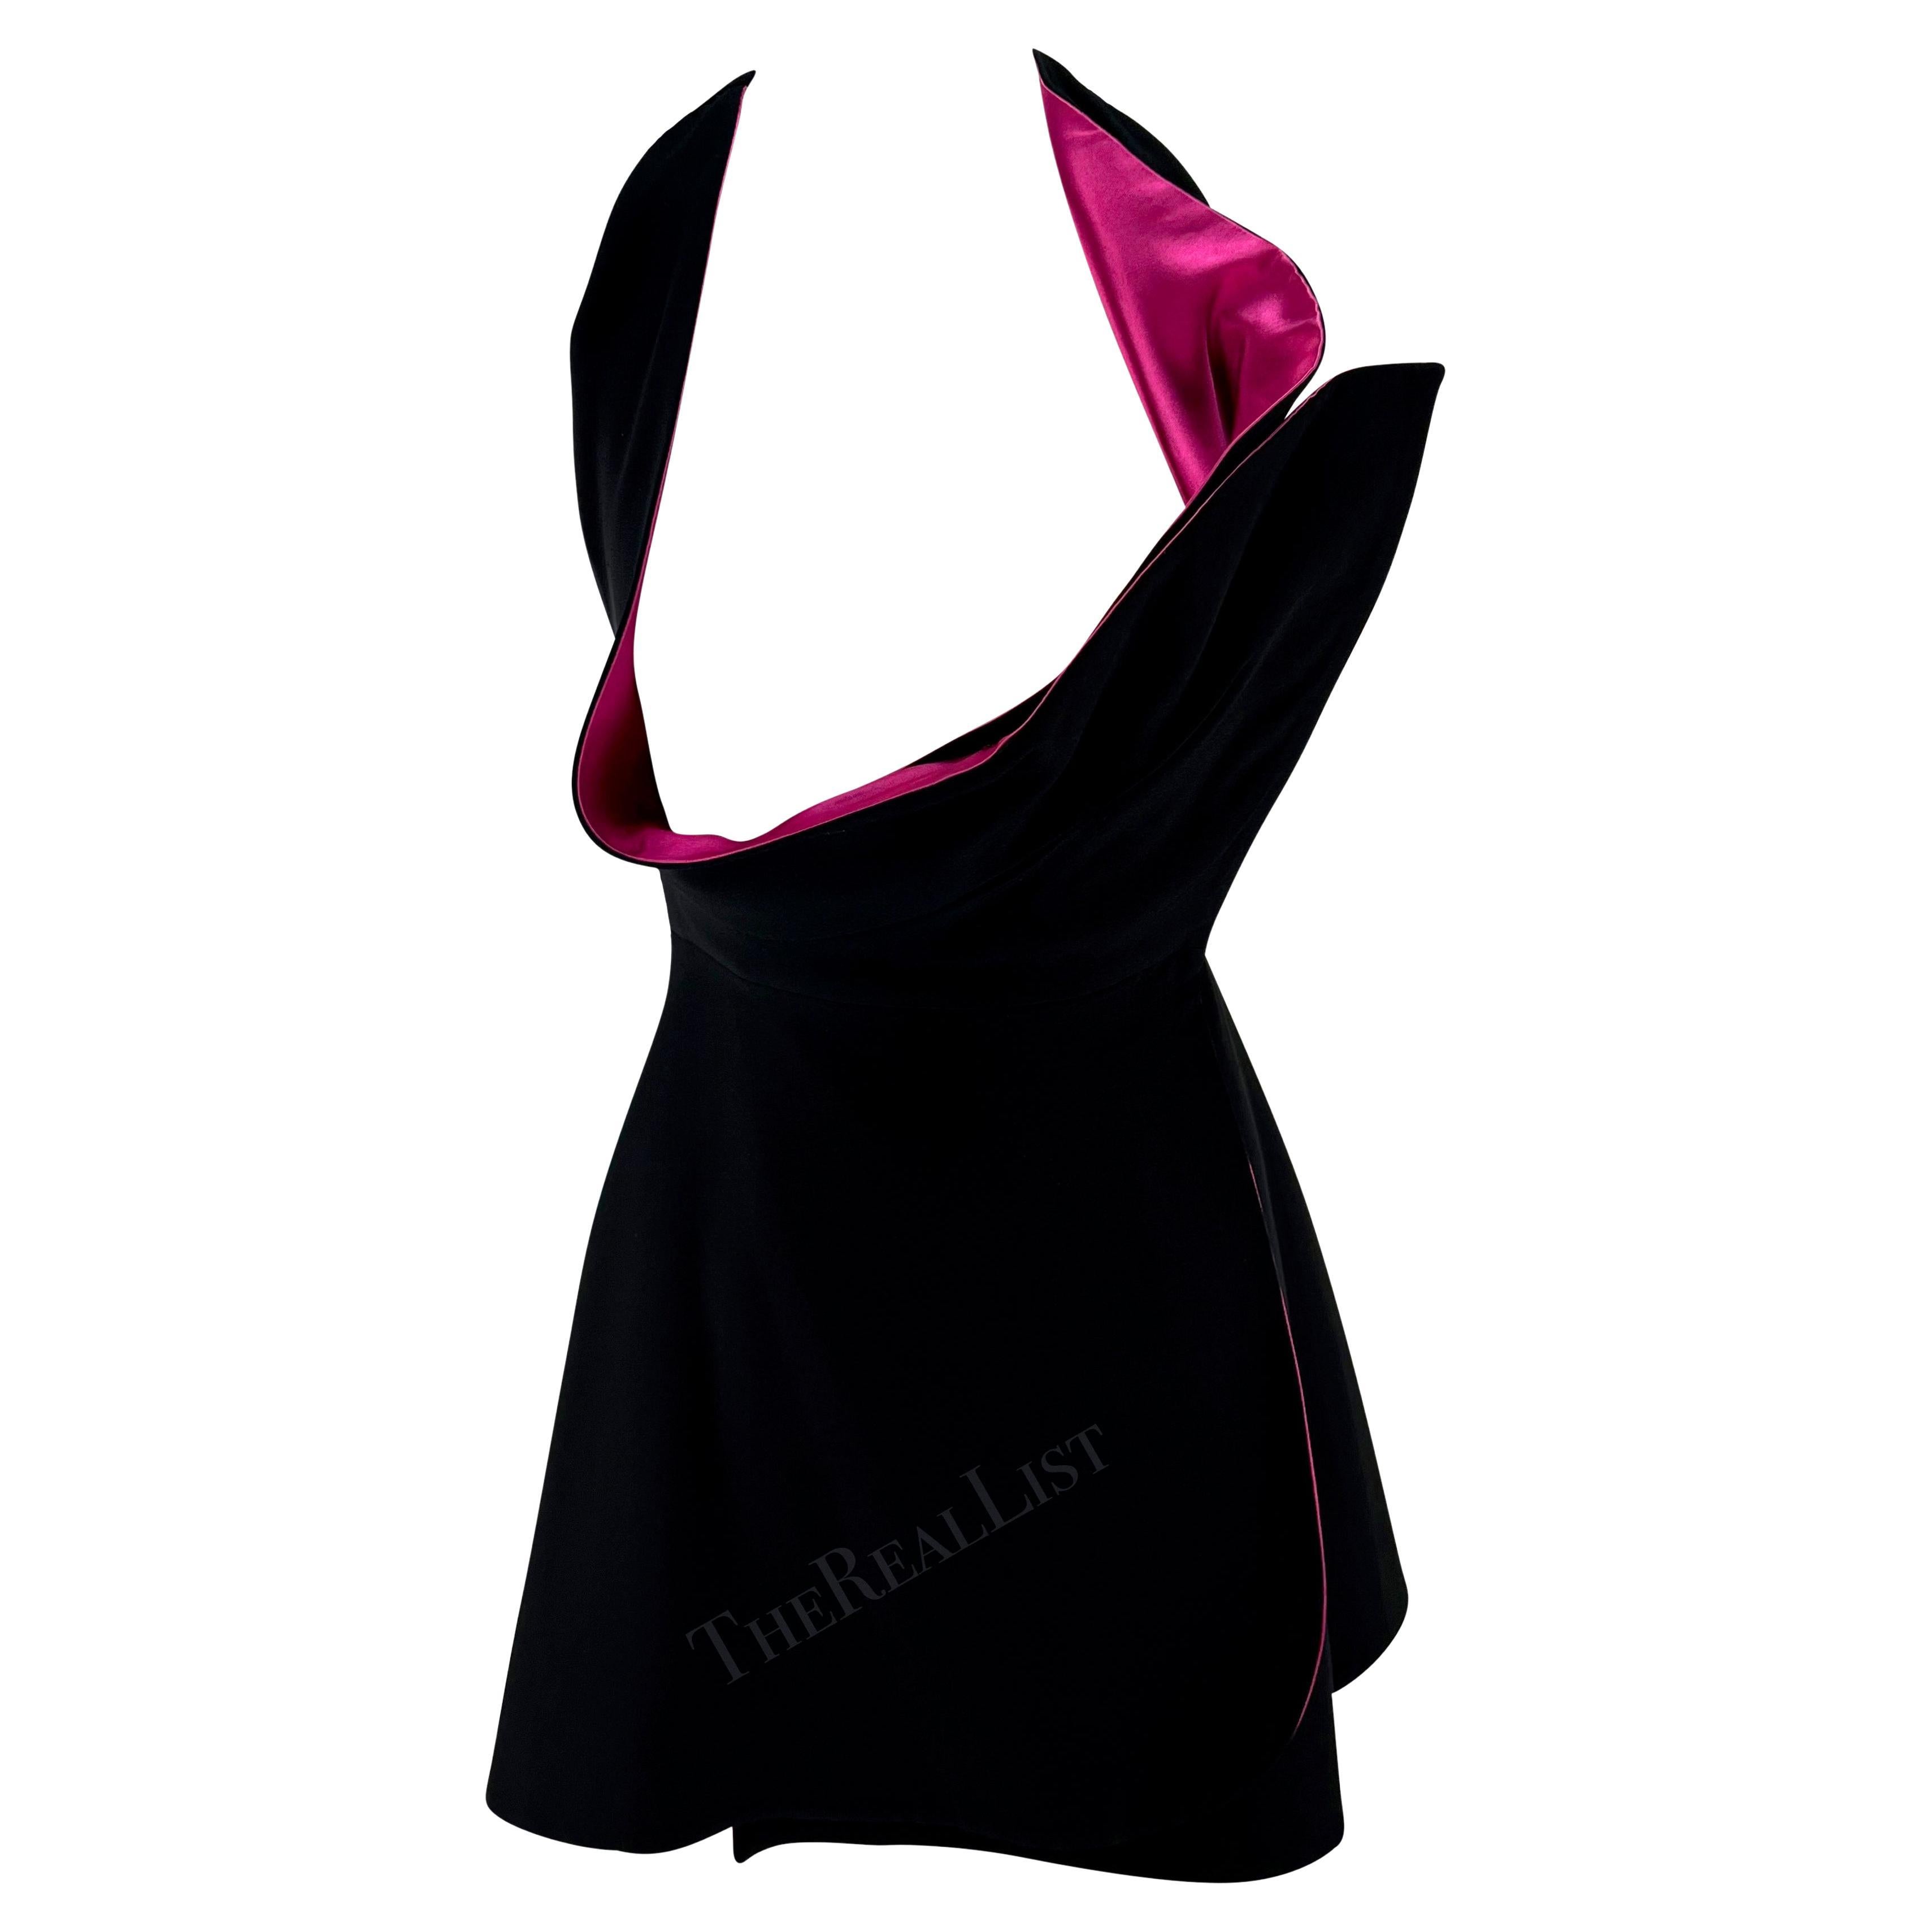 F/W 1991 Giani Versace Runway Open Bust Black Hot Pink Wrap Mini Dress For Sale